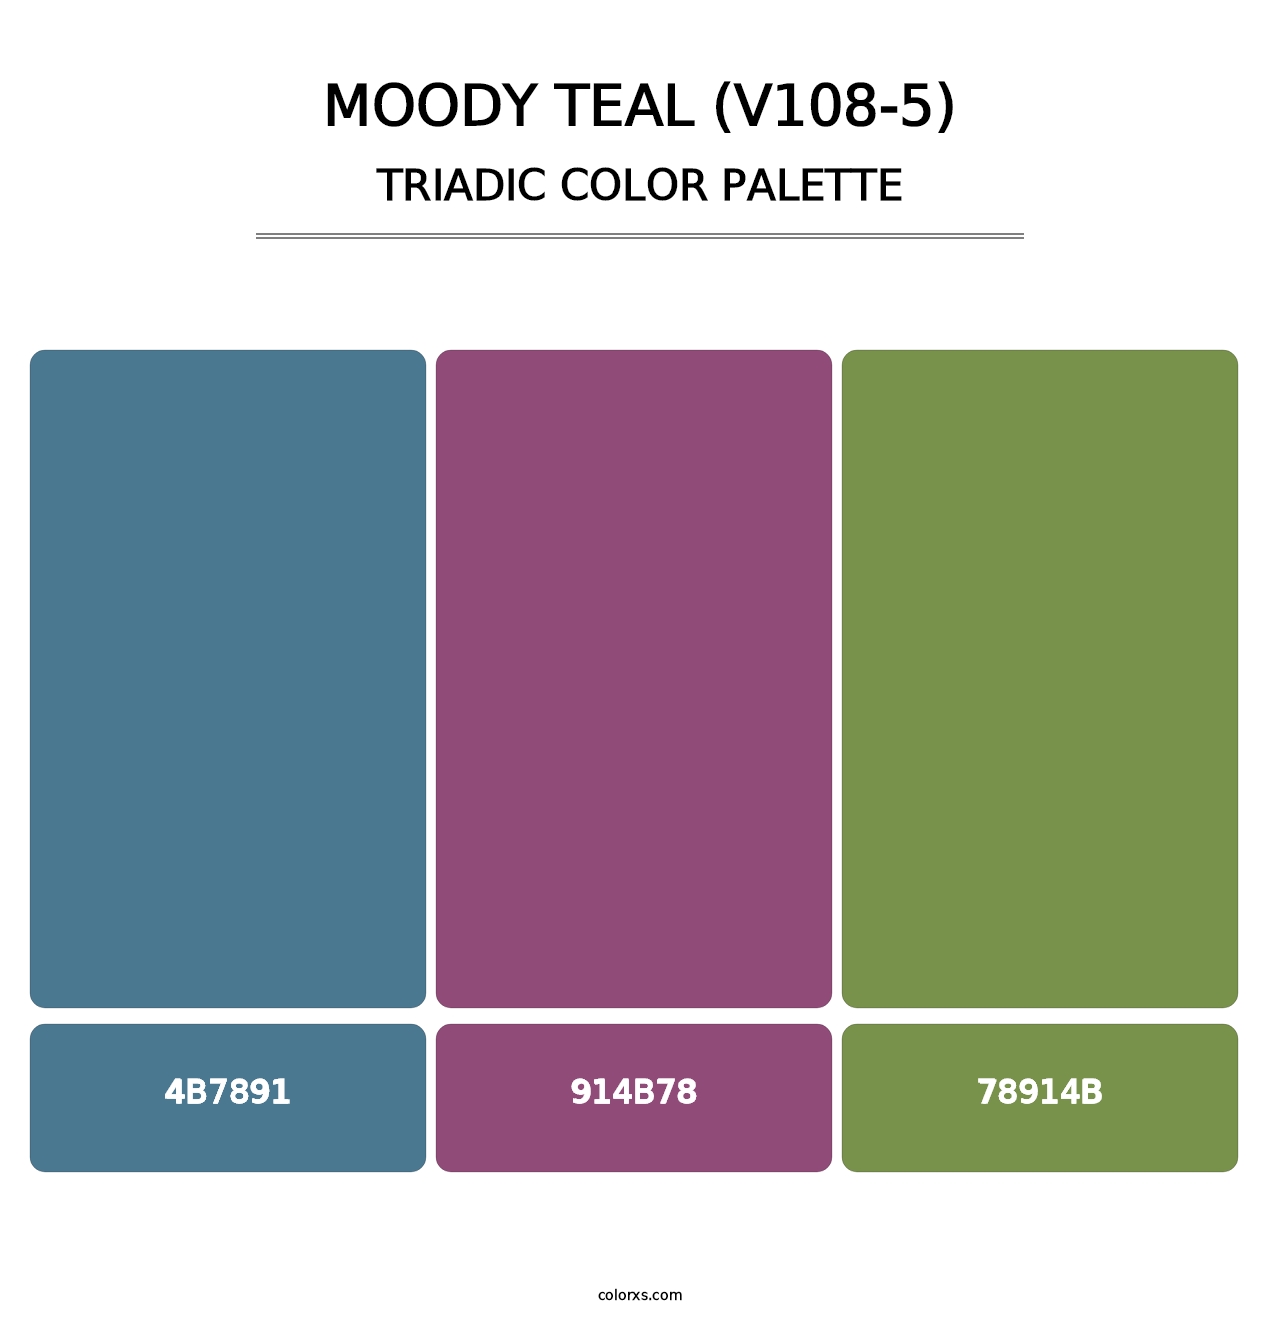 Moody Teal (V108-5) - Triadic Color Palette